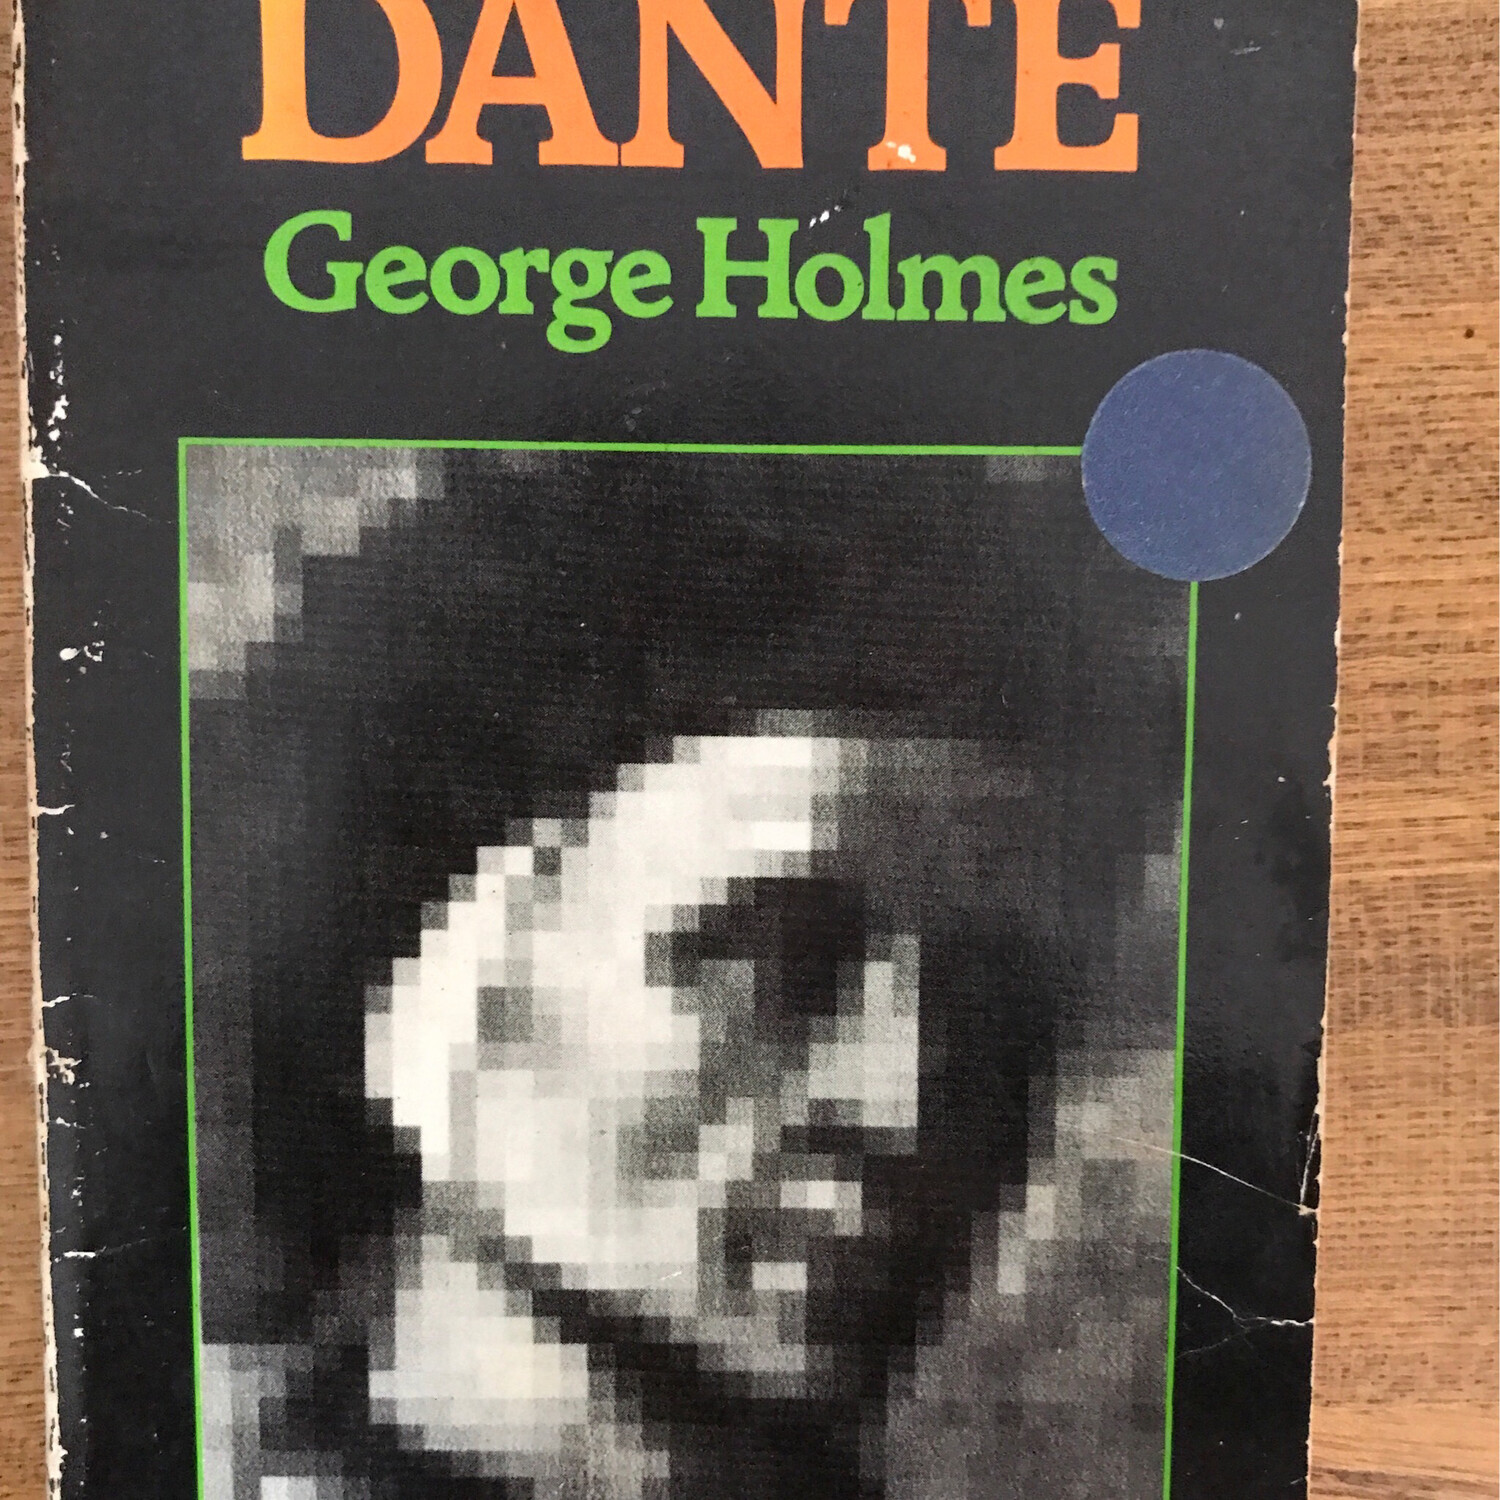 Dante, George Holmes